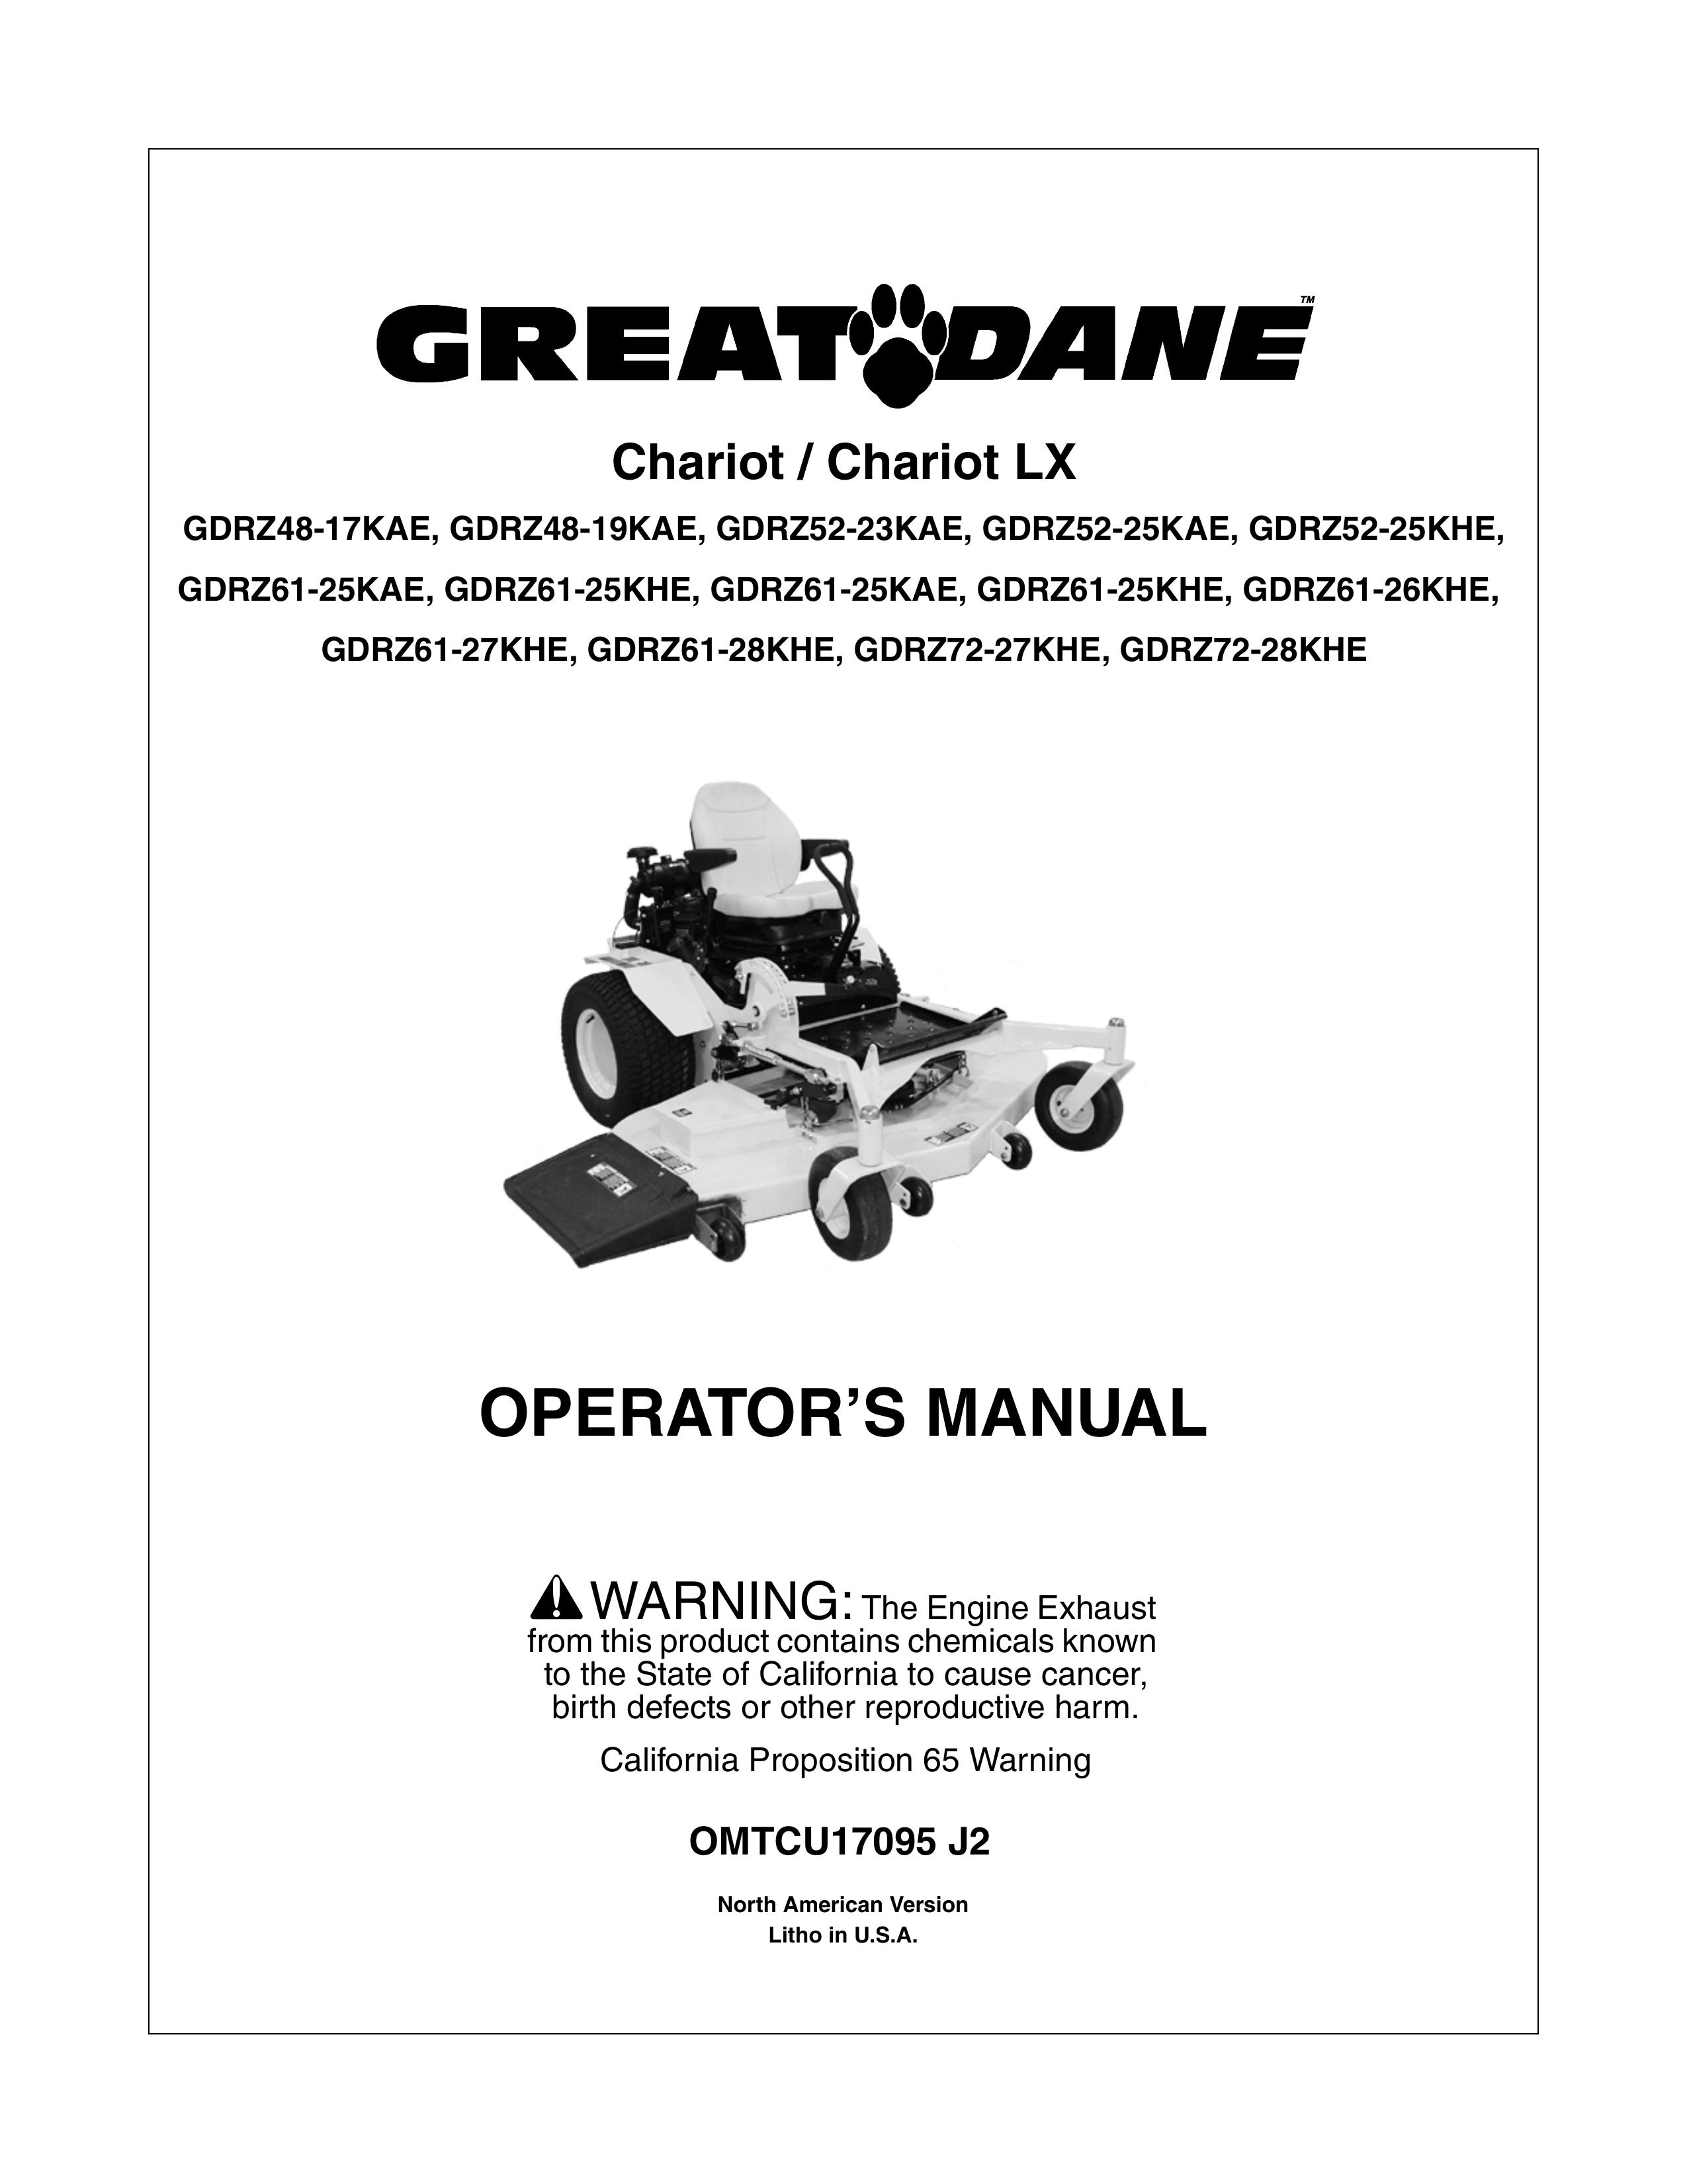 Great Dane GDRZ61-25KHE Lawn Mower User Manual